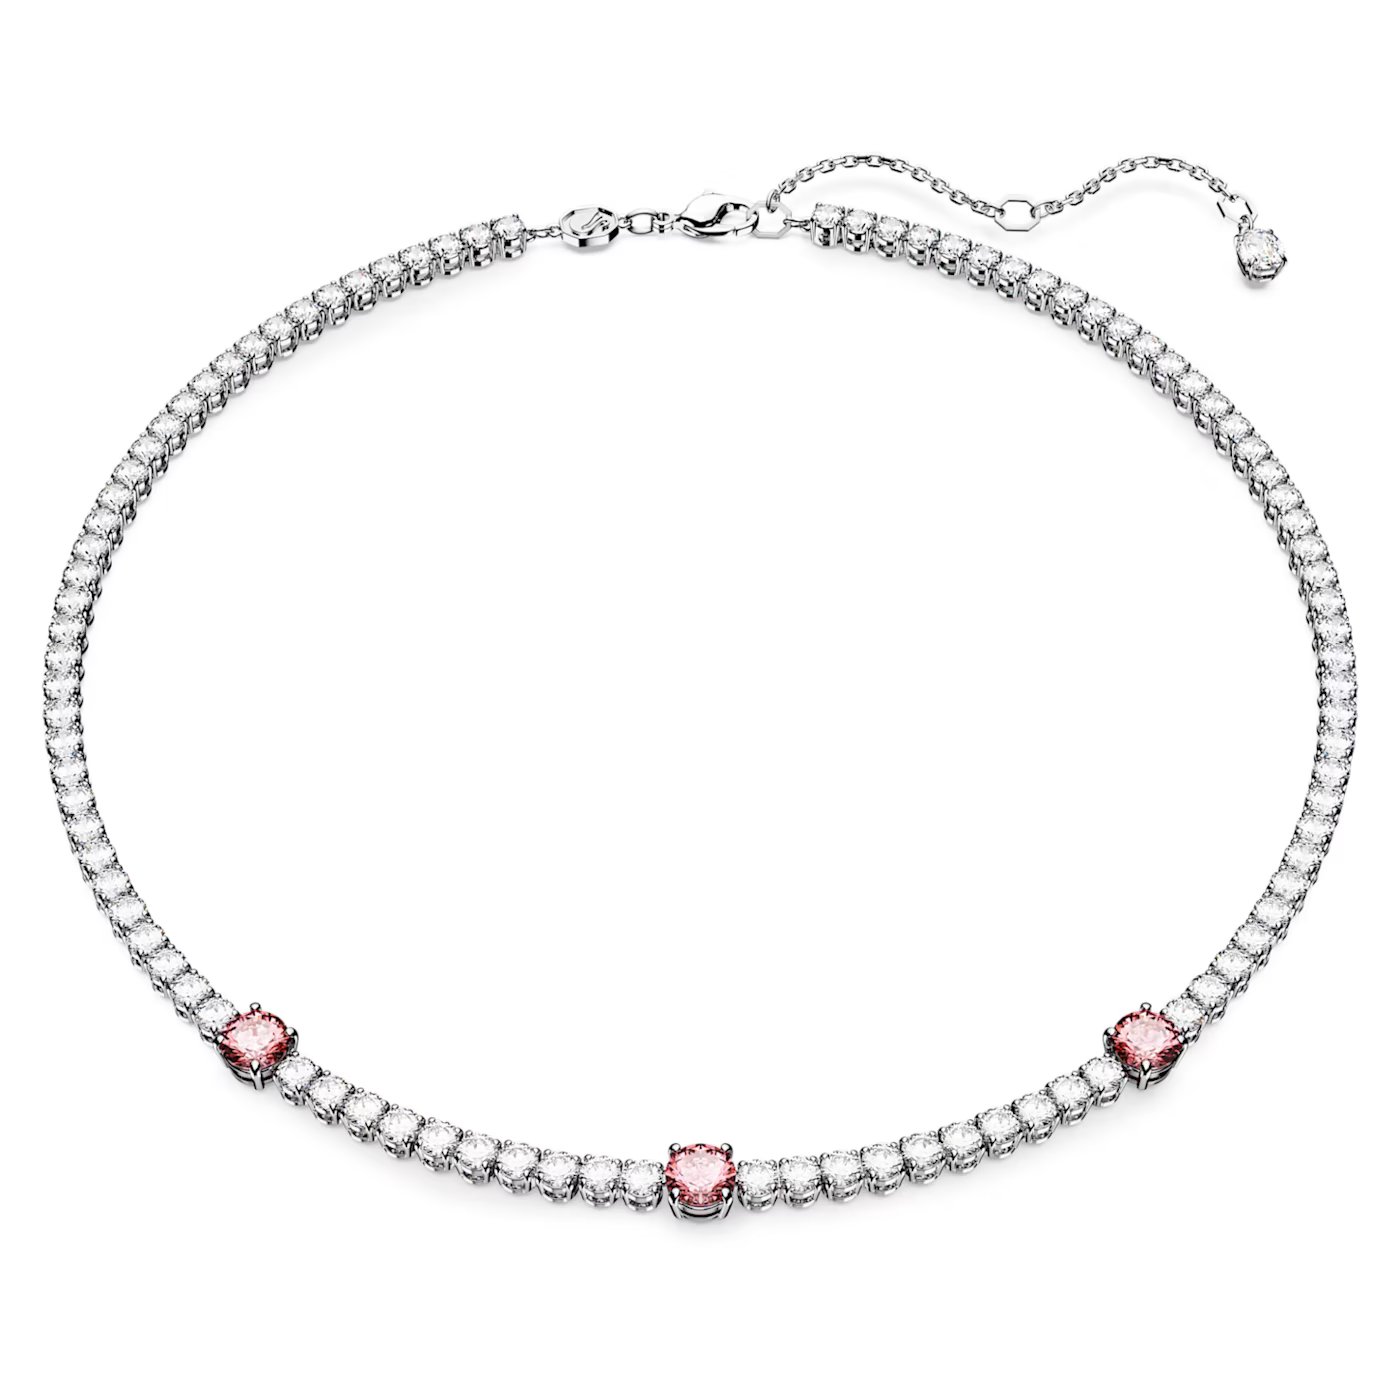 64aec5b2b4d8e_matrix-tennis-necklace--mixed-cuts--pink--rhodium-plated-swarovski-5666165.jpg